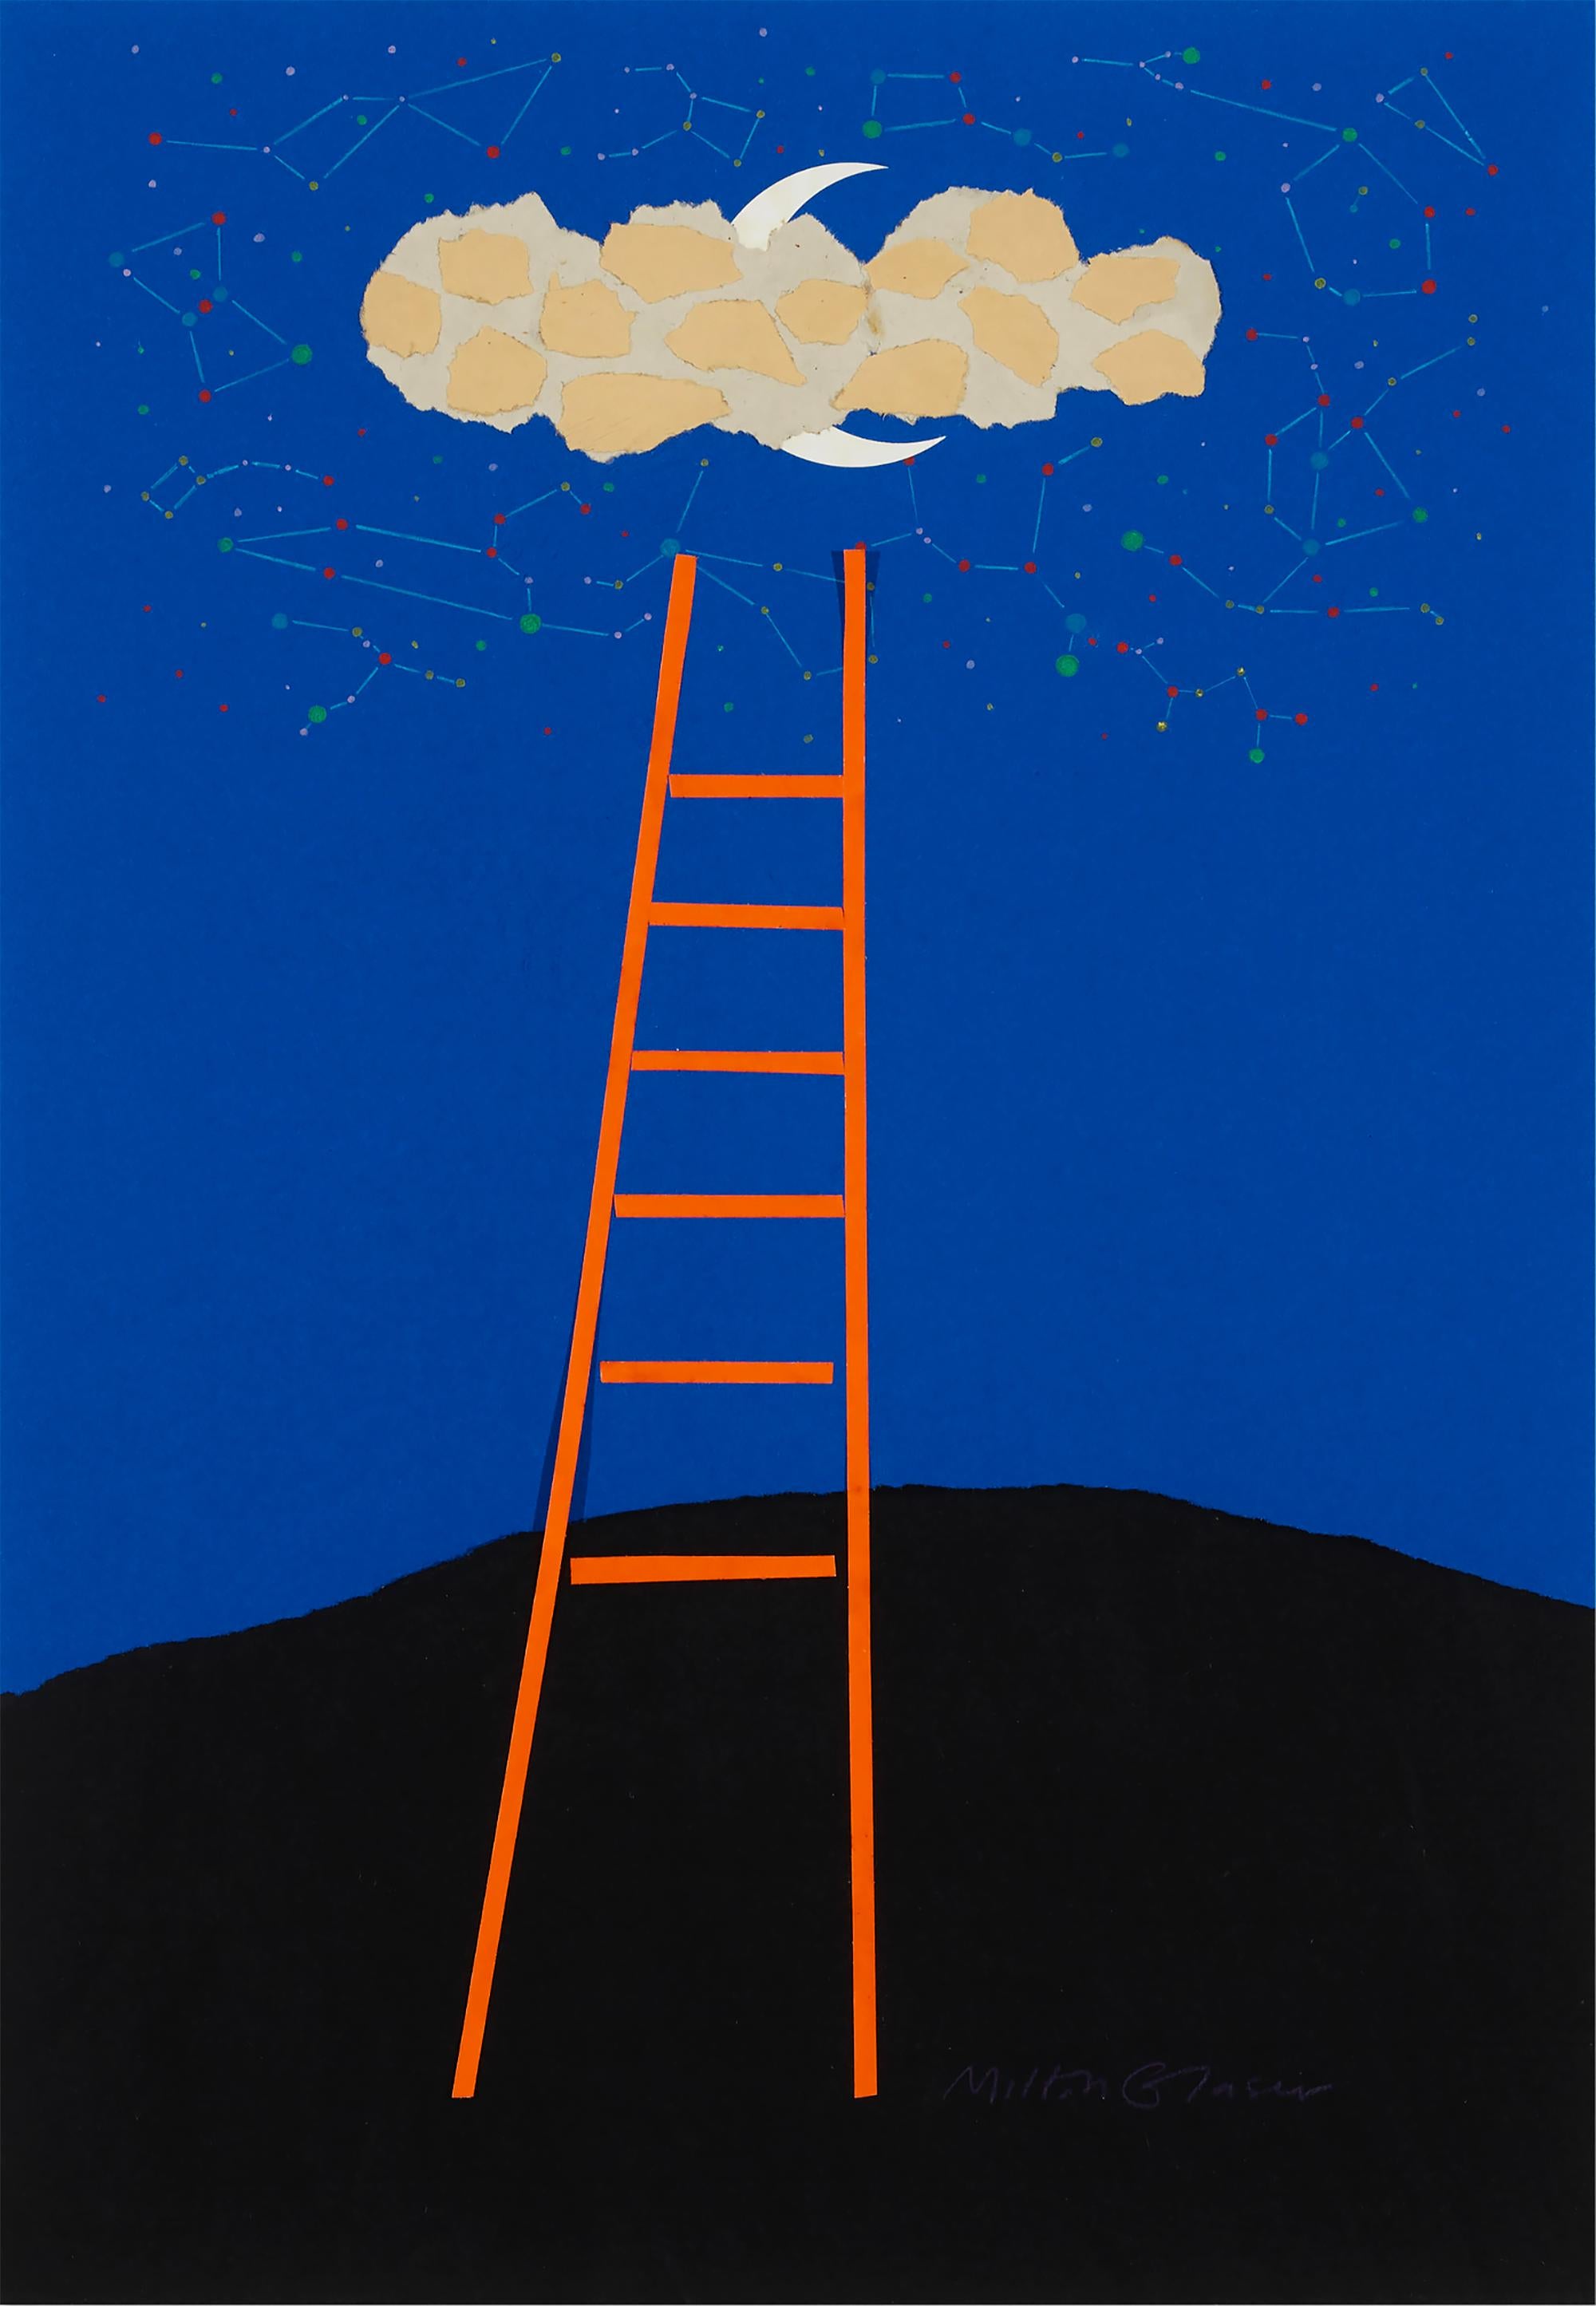 Juilliard School of Music (Ladder) poster - Original art